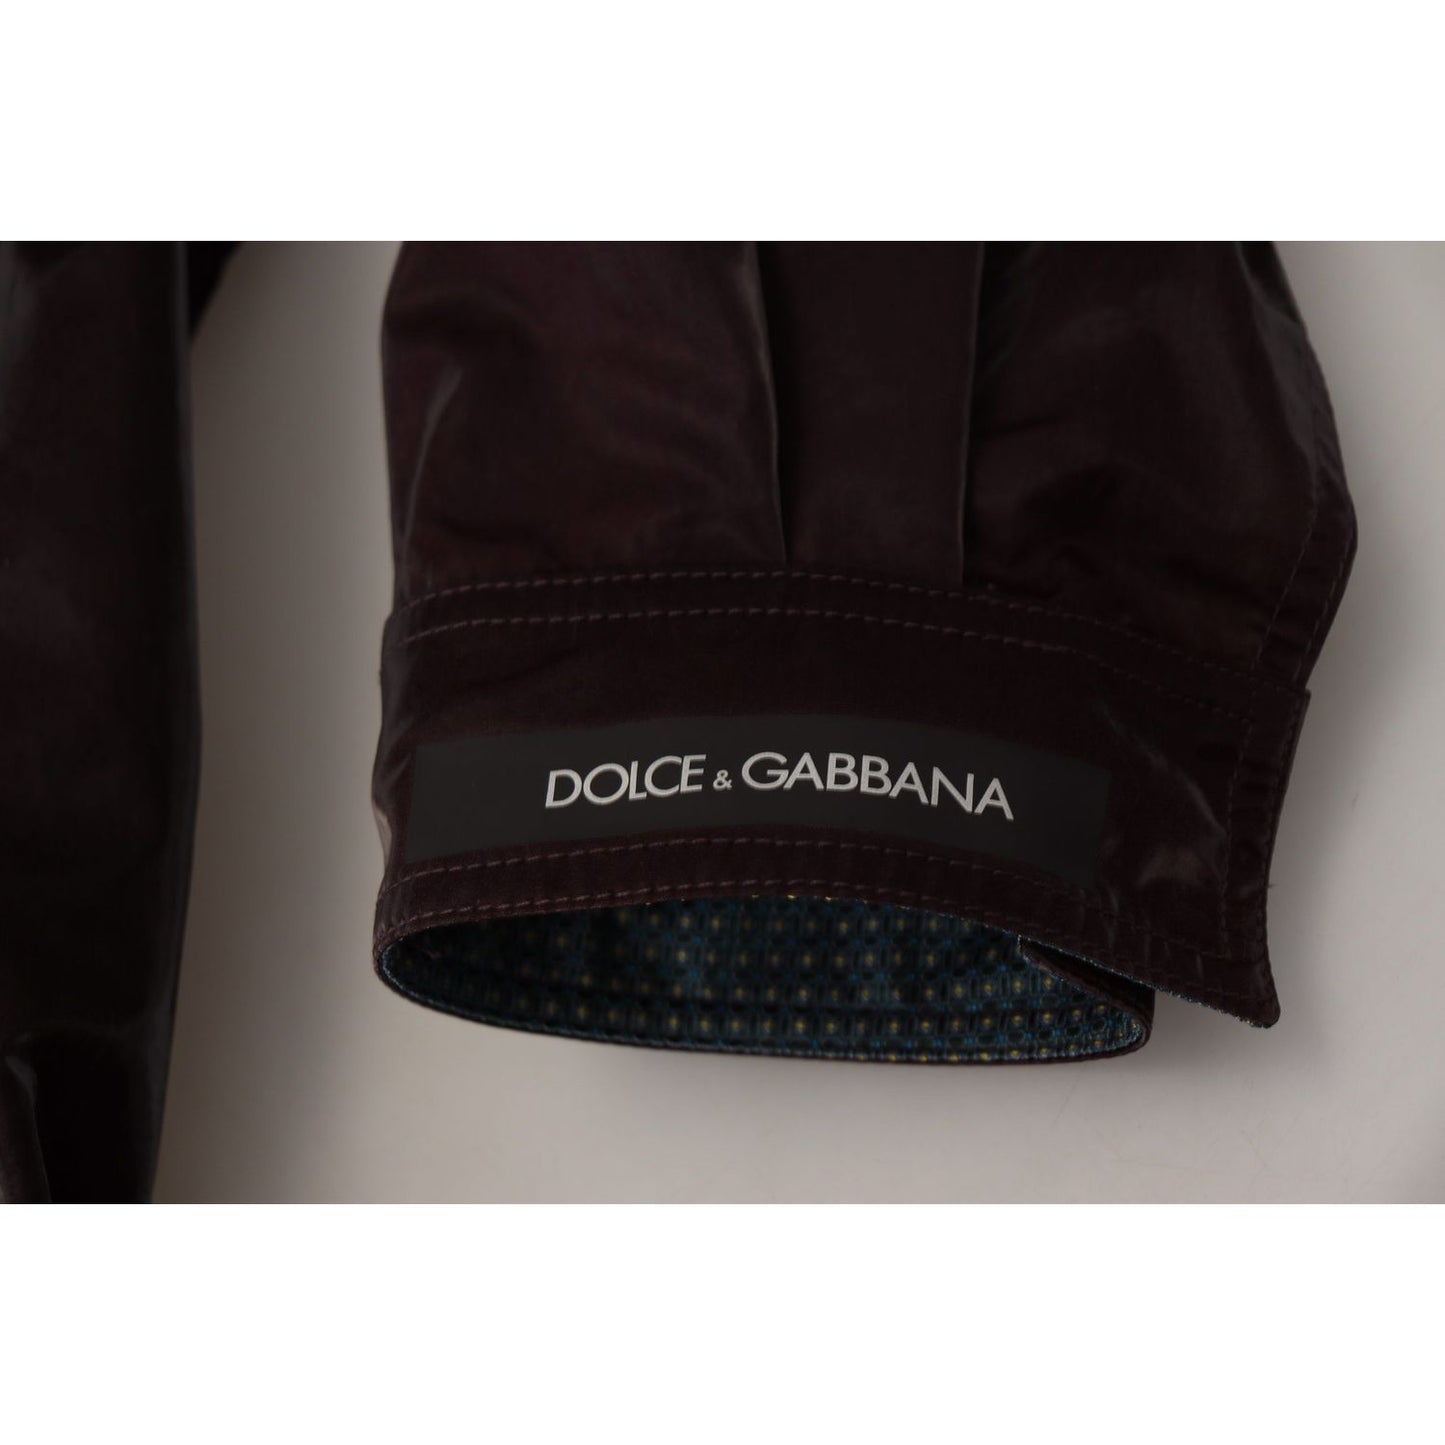 Dolce & Gabbana Elegant Bordeaux Collared Jacket bordeaux-nylon-collared-men-coat-jacket IMG_8284-scaled-d9f8eec2-0a7.jpg